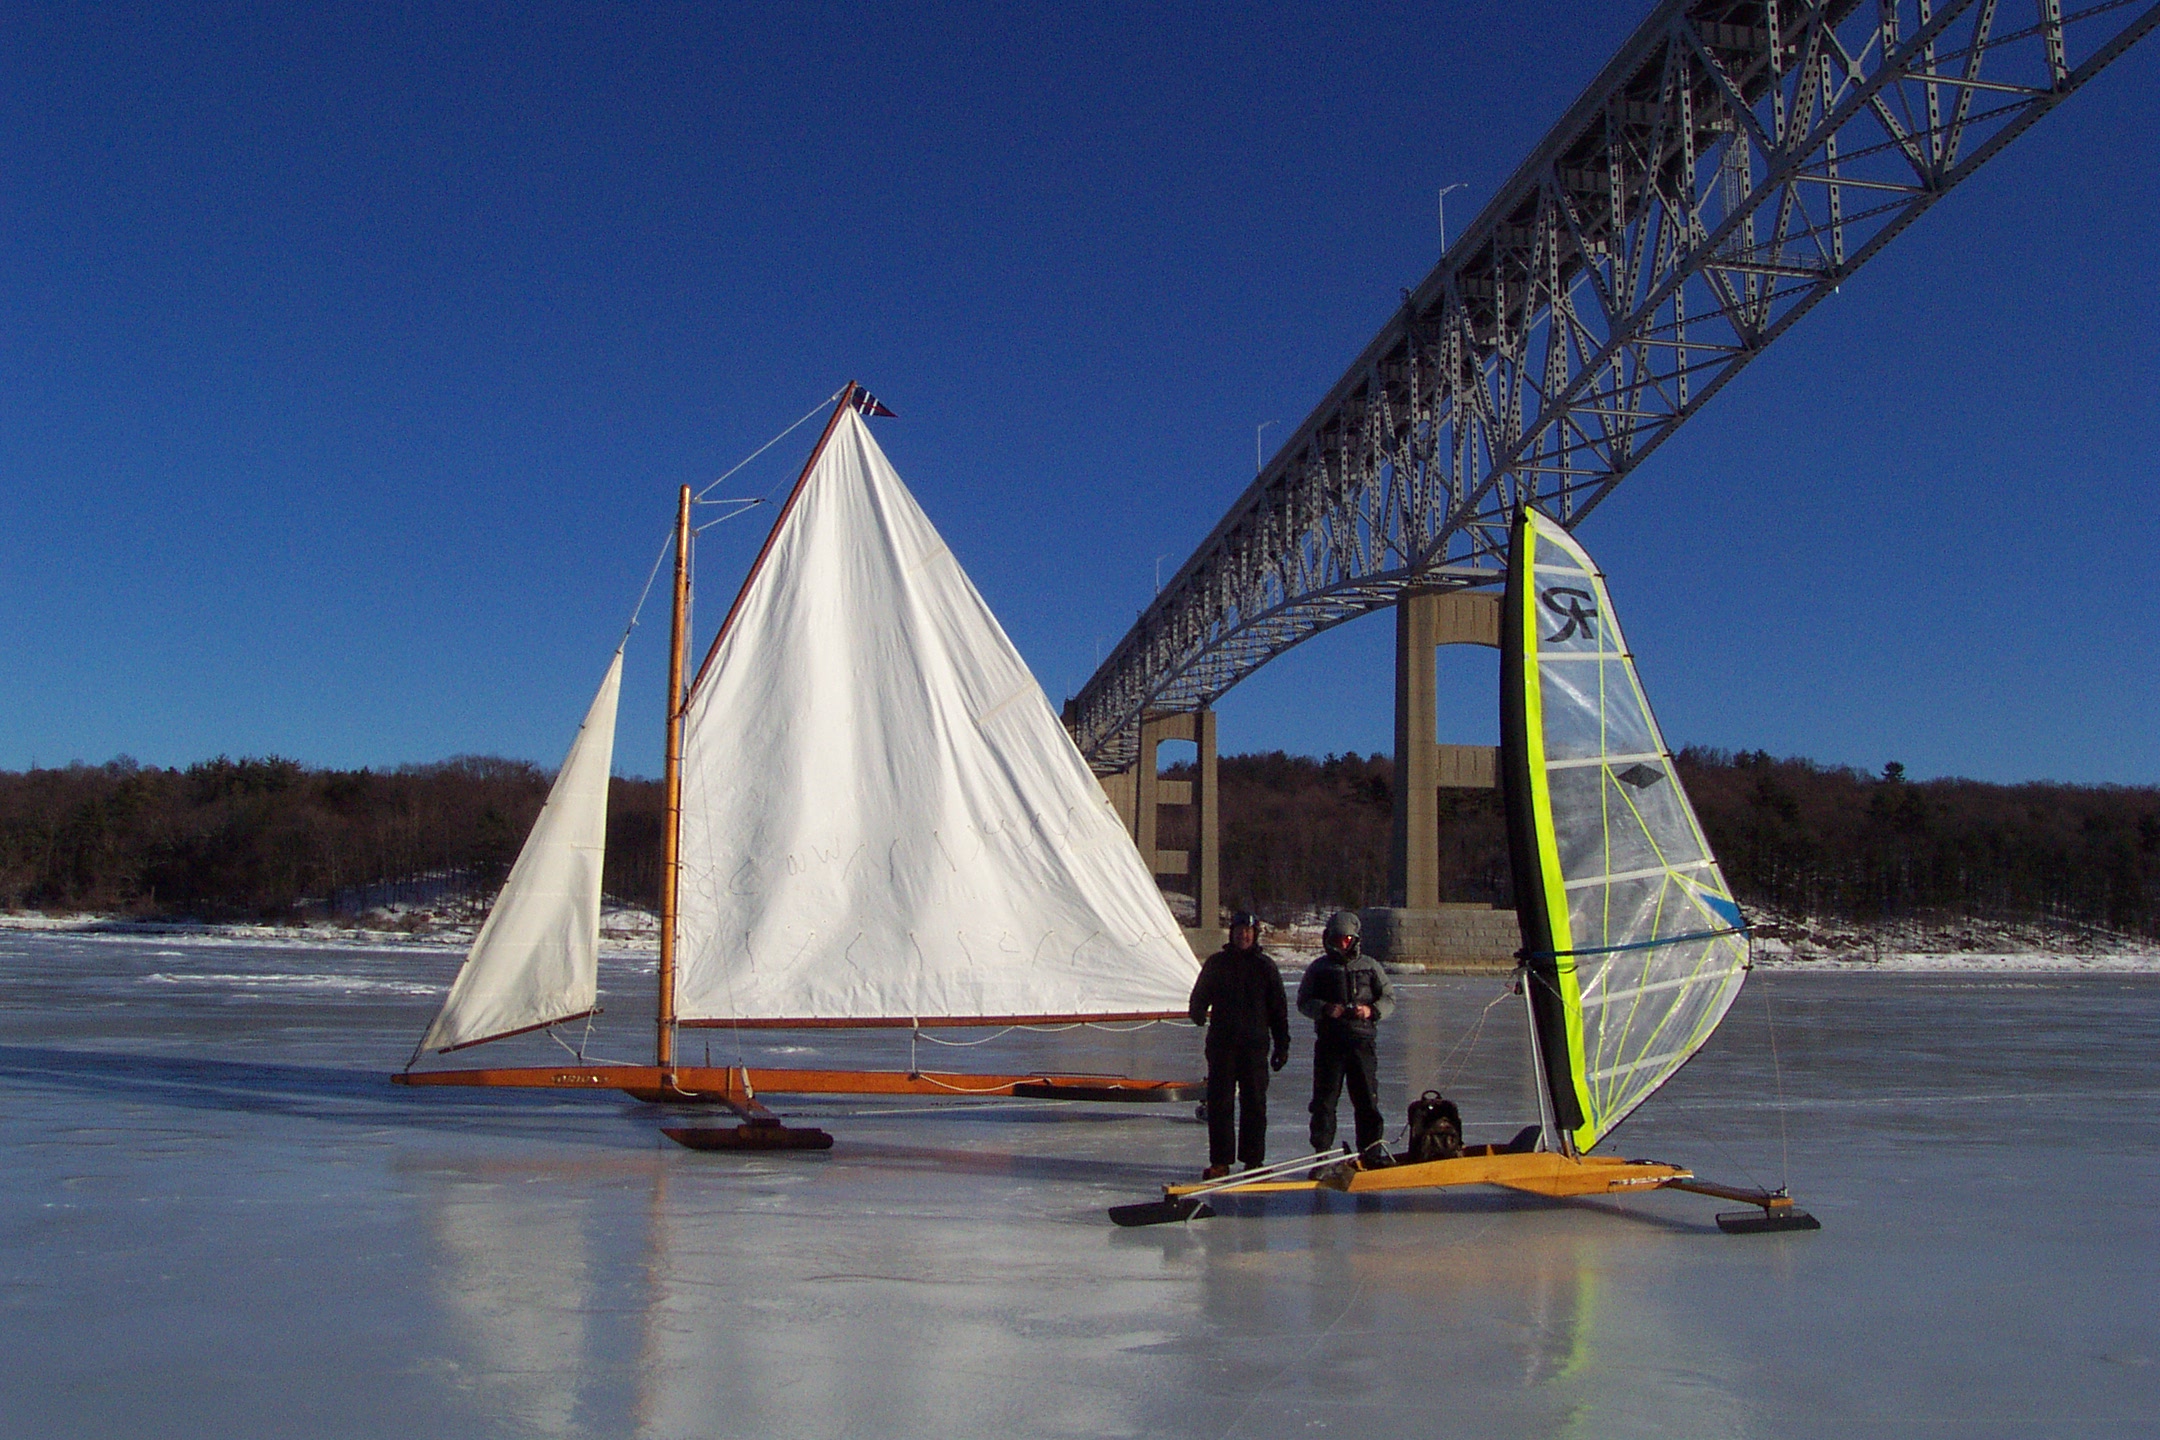 Ice Yachts under the Kingston-Rhinecliff Bridge